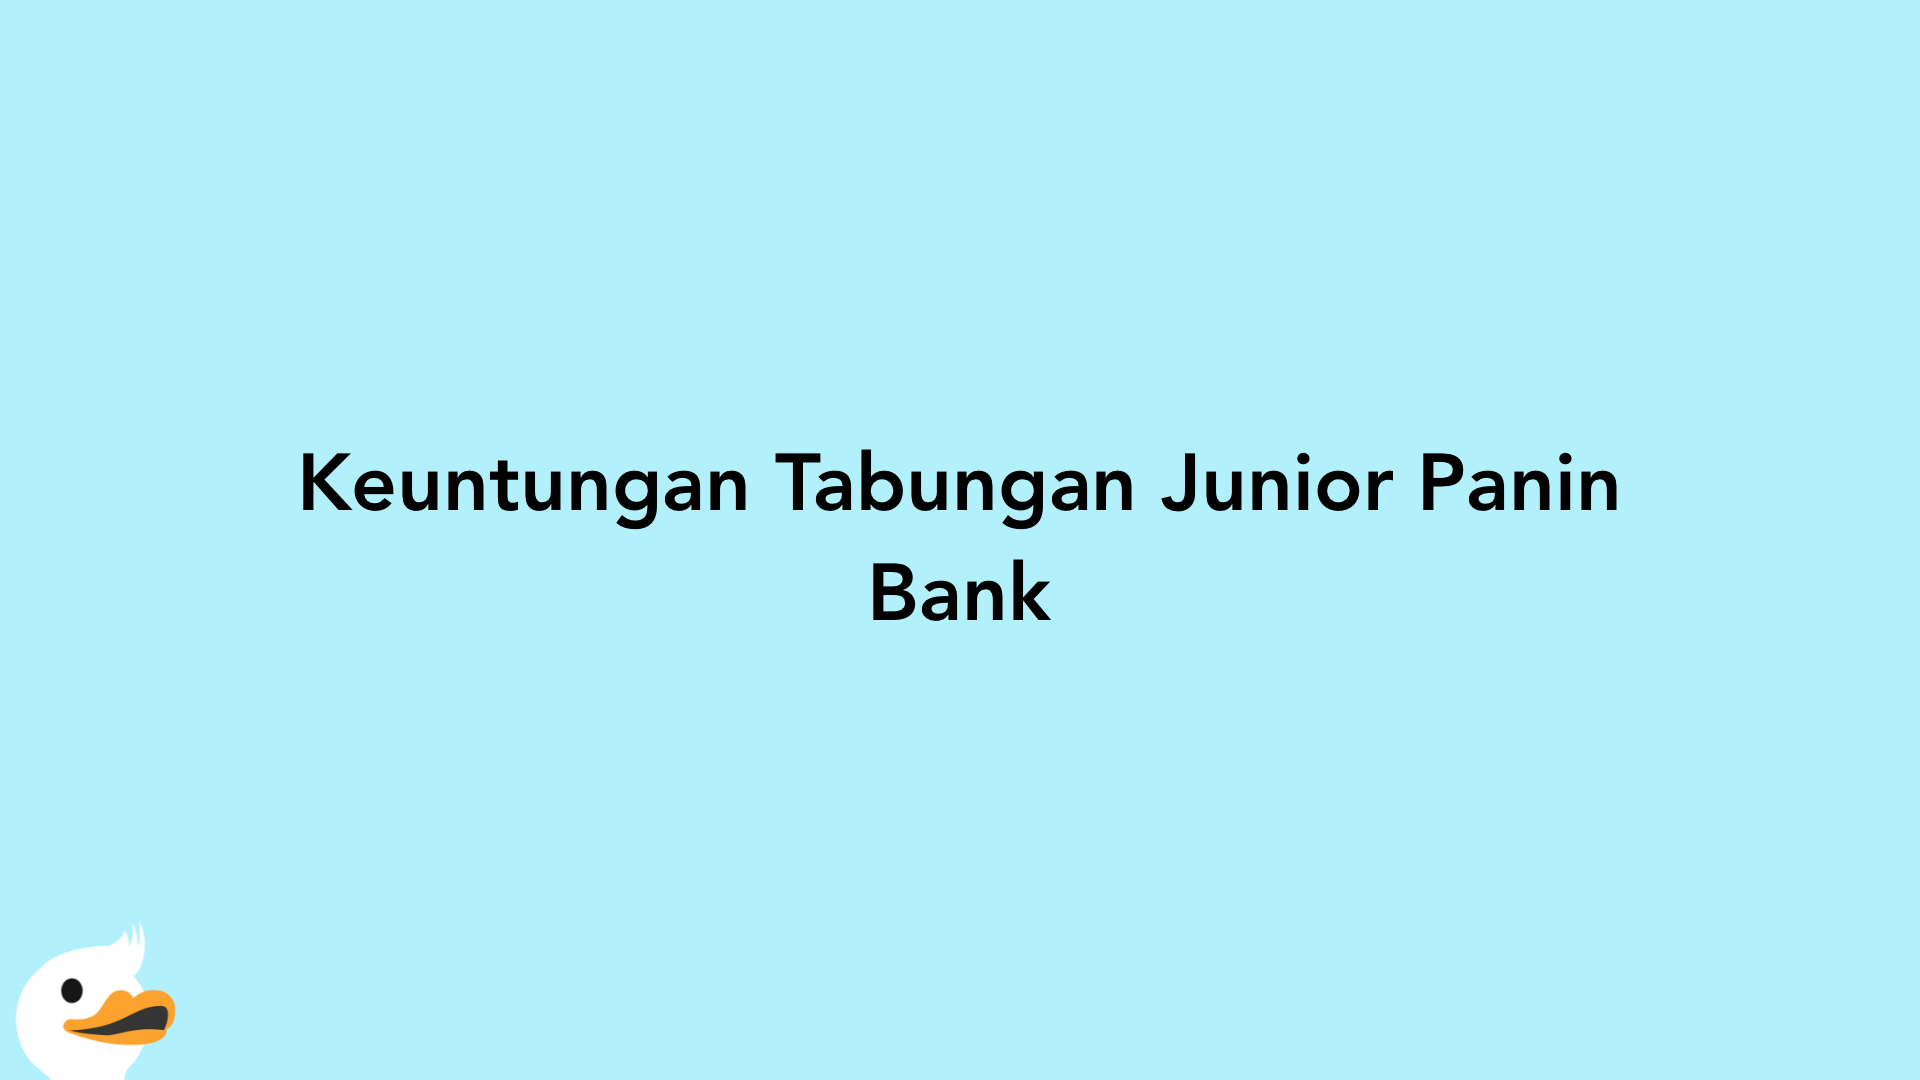 Keuntungan Tabungan Junior Panin Bank